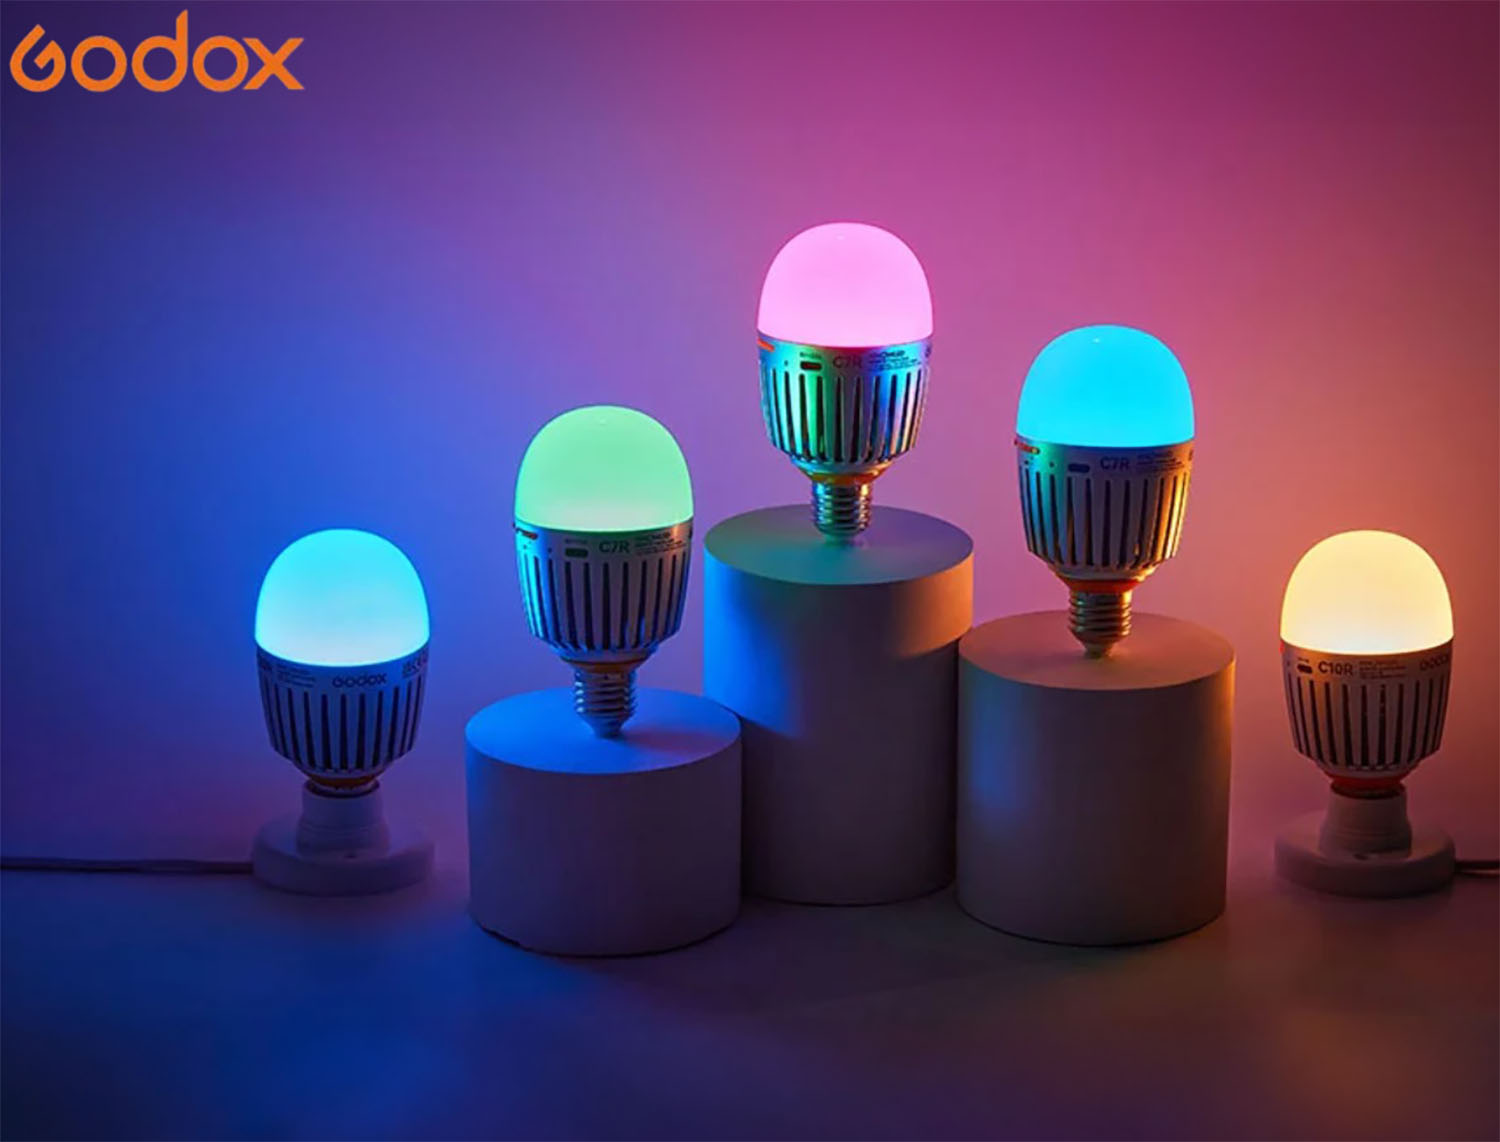 Godox: Ανακοίνωσε τους νέους RGB LED λαμπτήρες C7R και C10R!